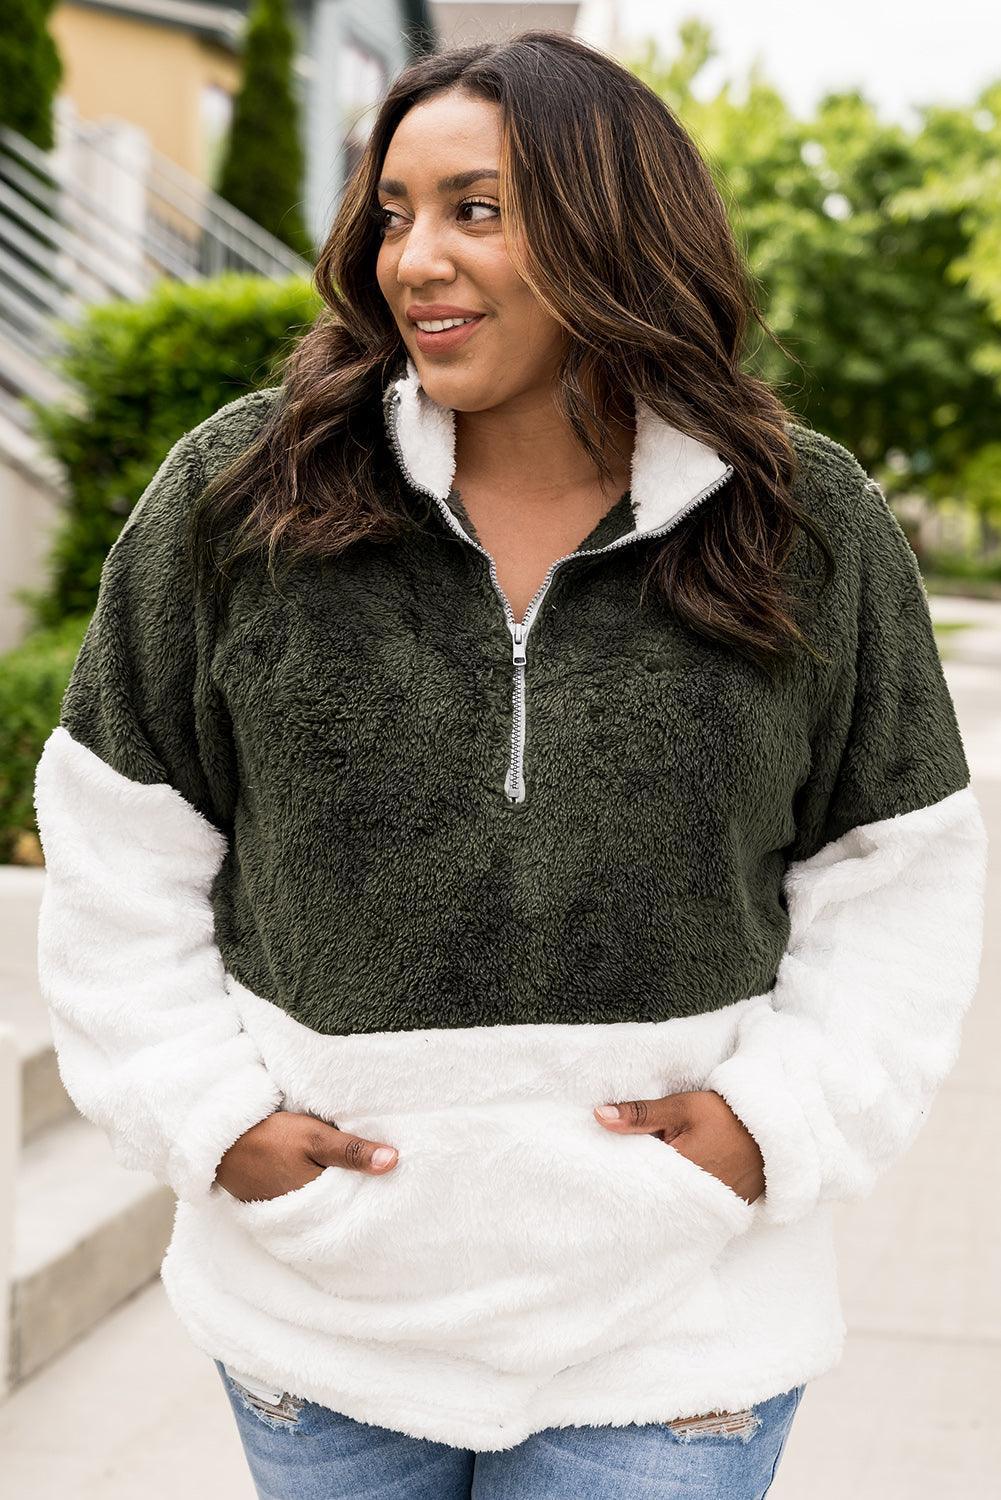 Relax Fit Plus Size Two-Tone Fleece Sweatshirt - MXSTUDIO.COM